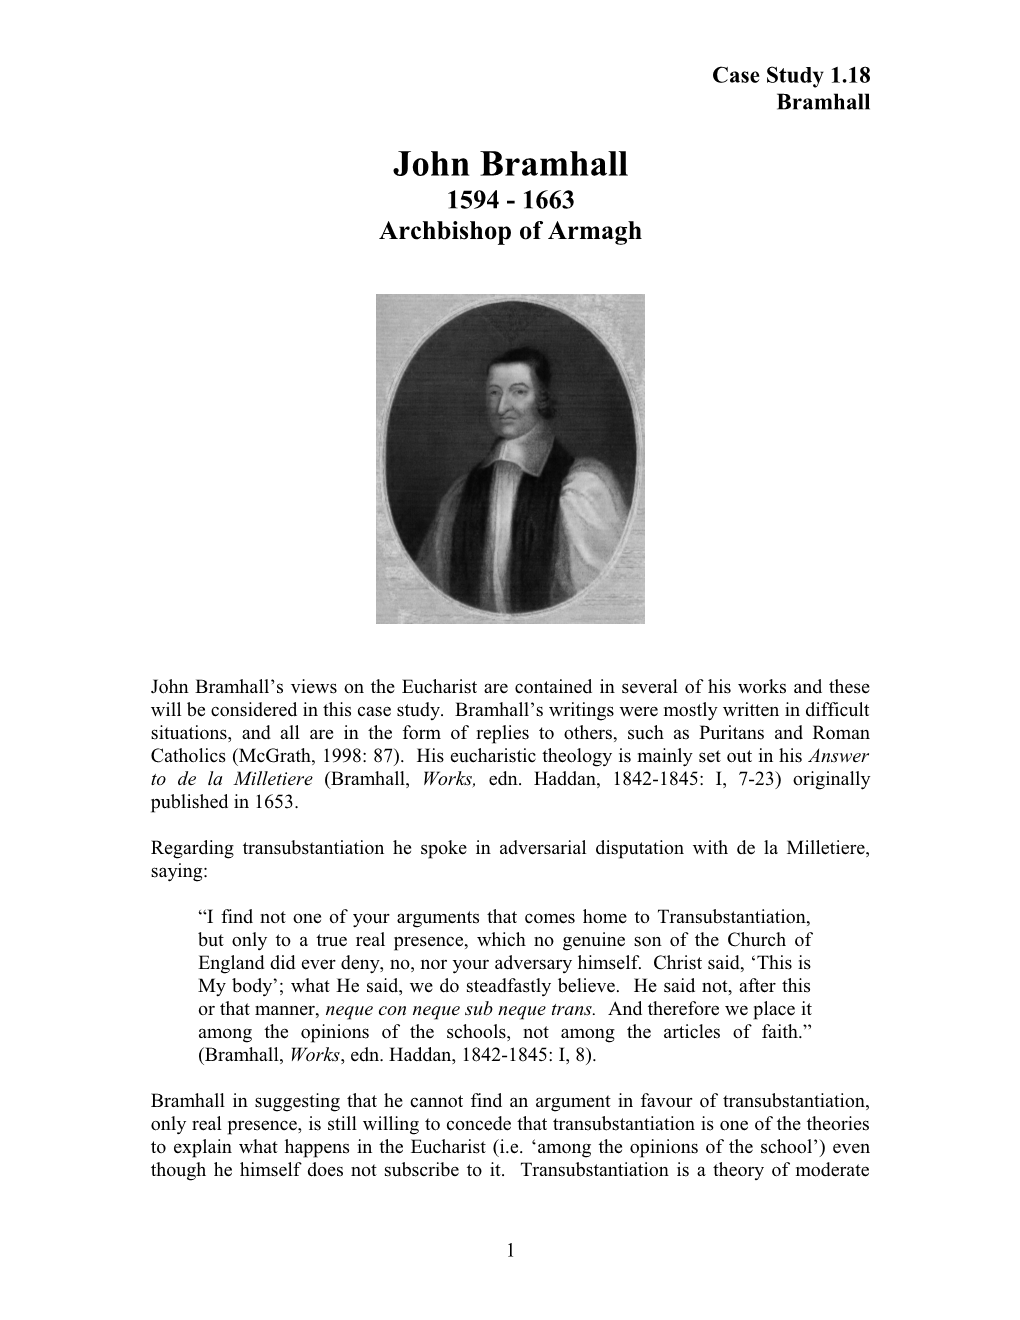 John Bramhall